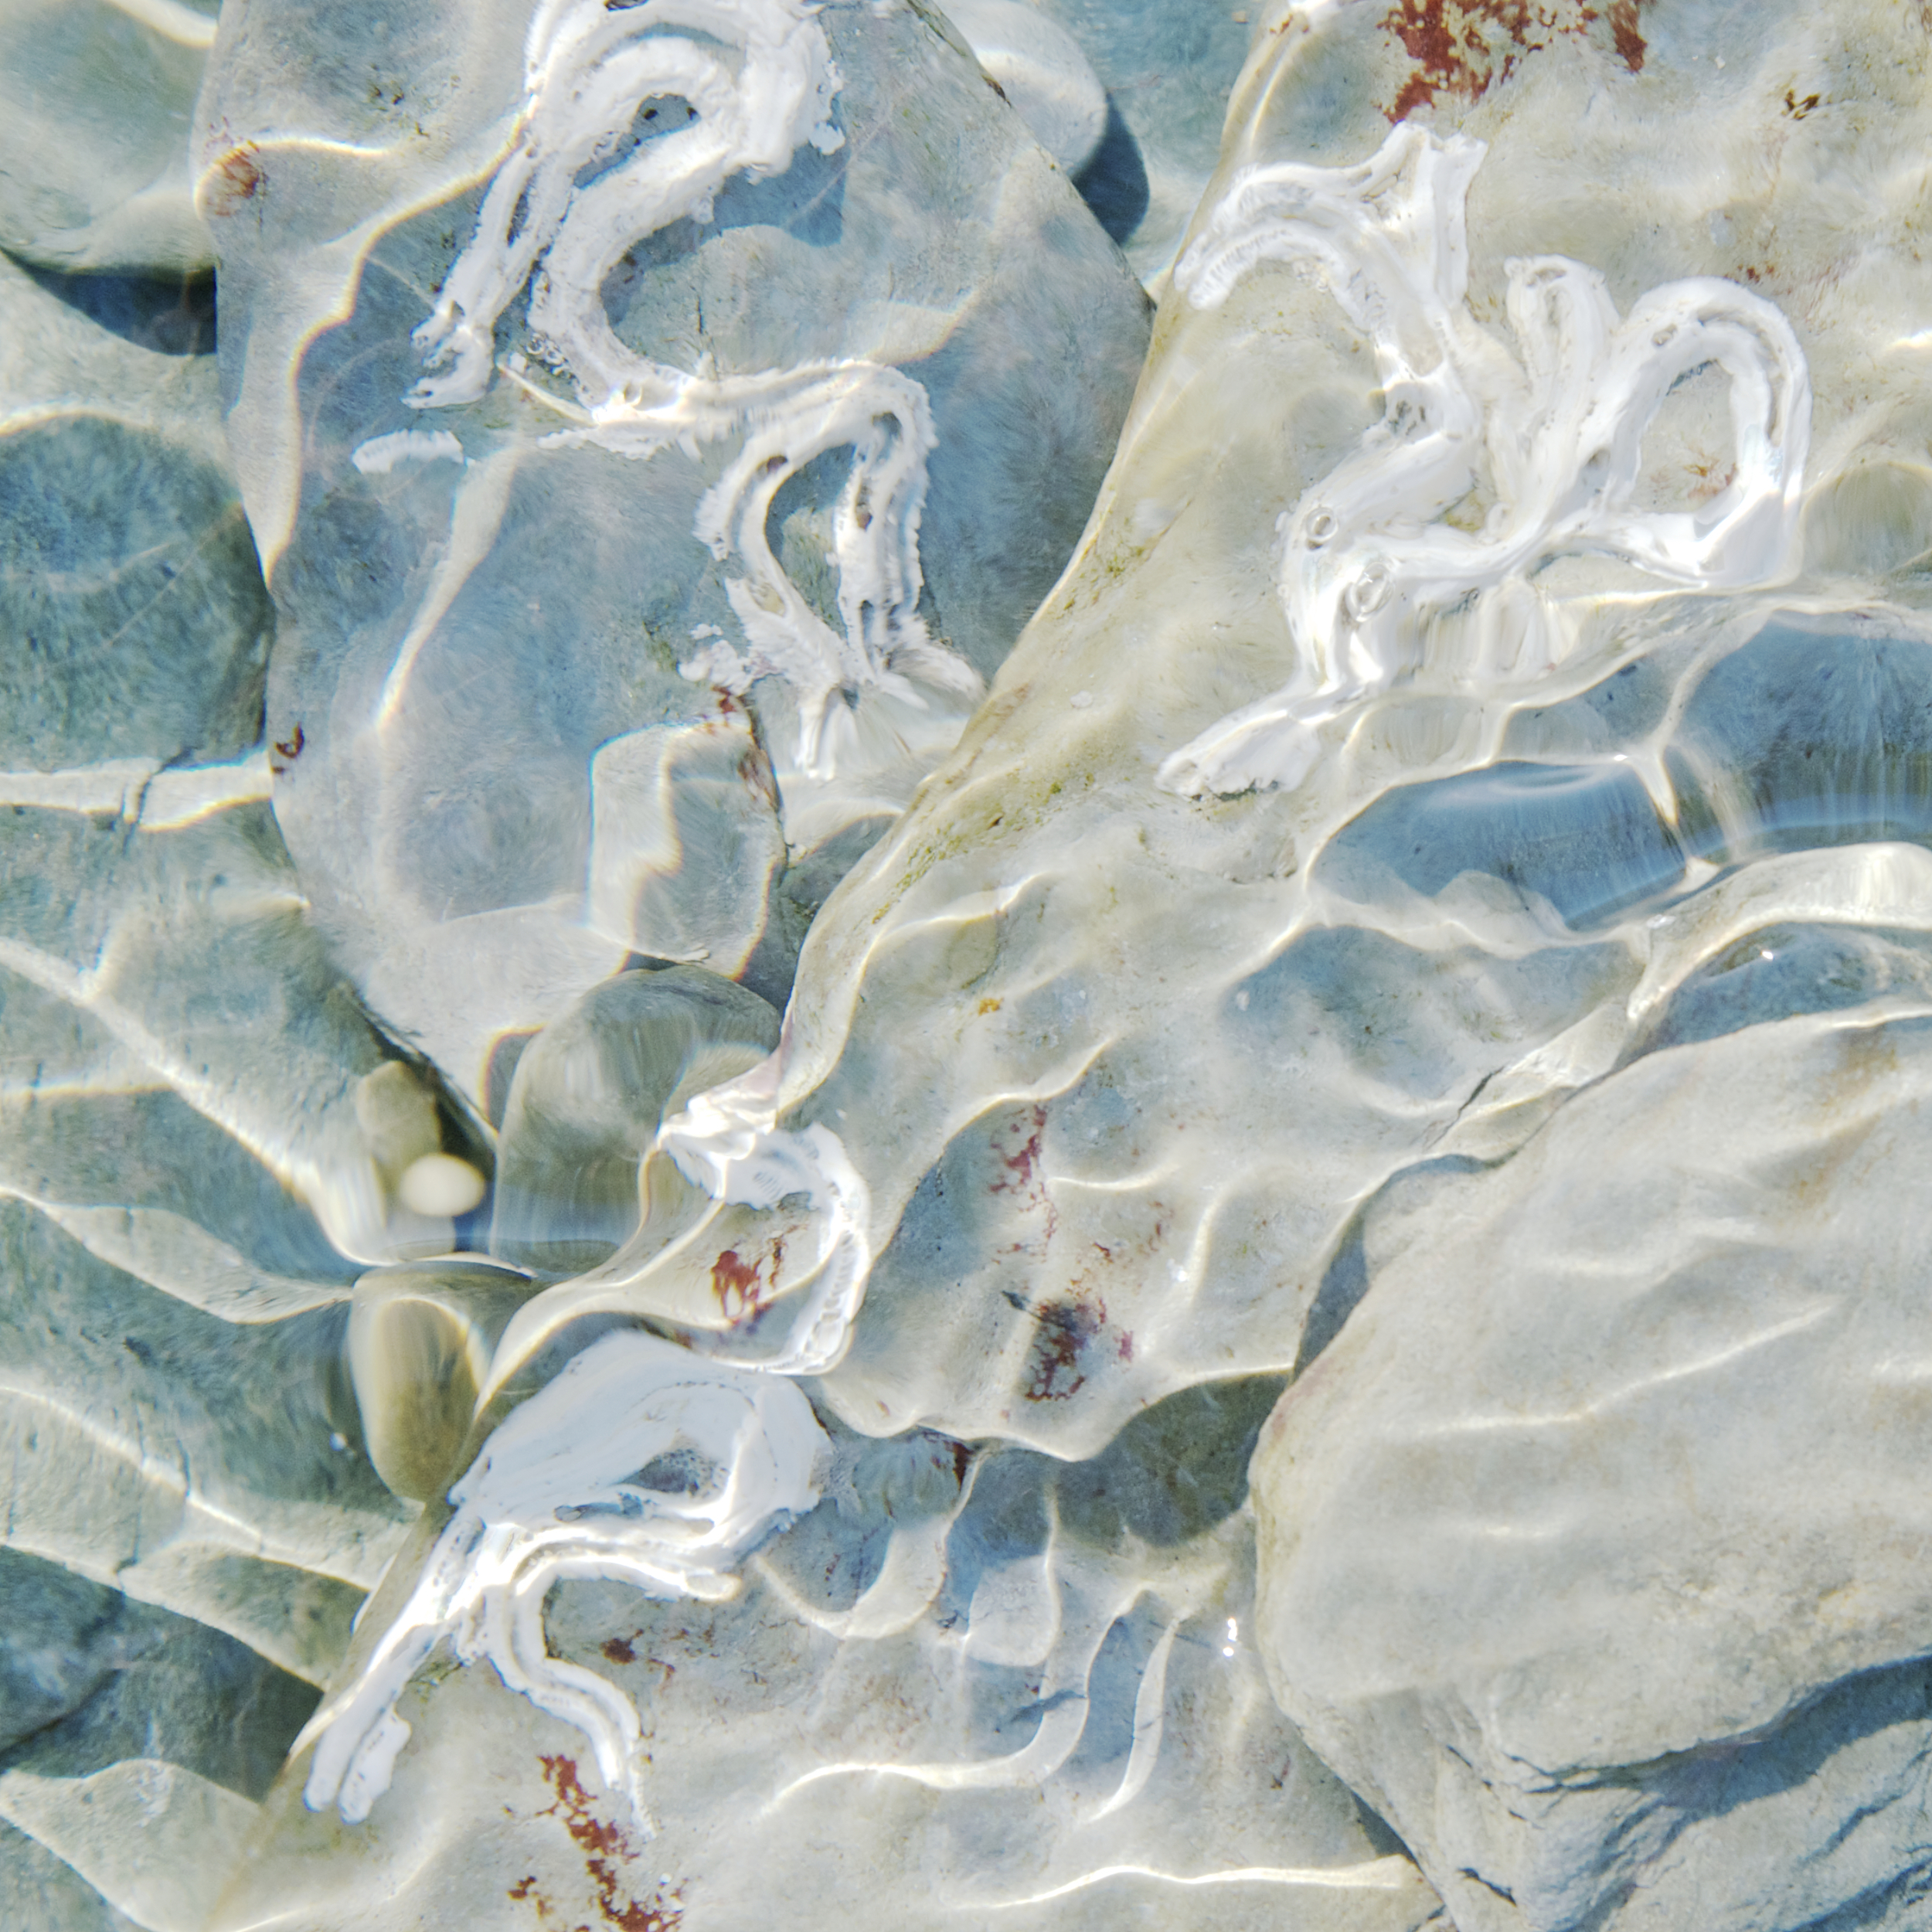 'Slate pebbles with keelworm tubes' by Lisa Woollett.jpg